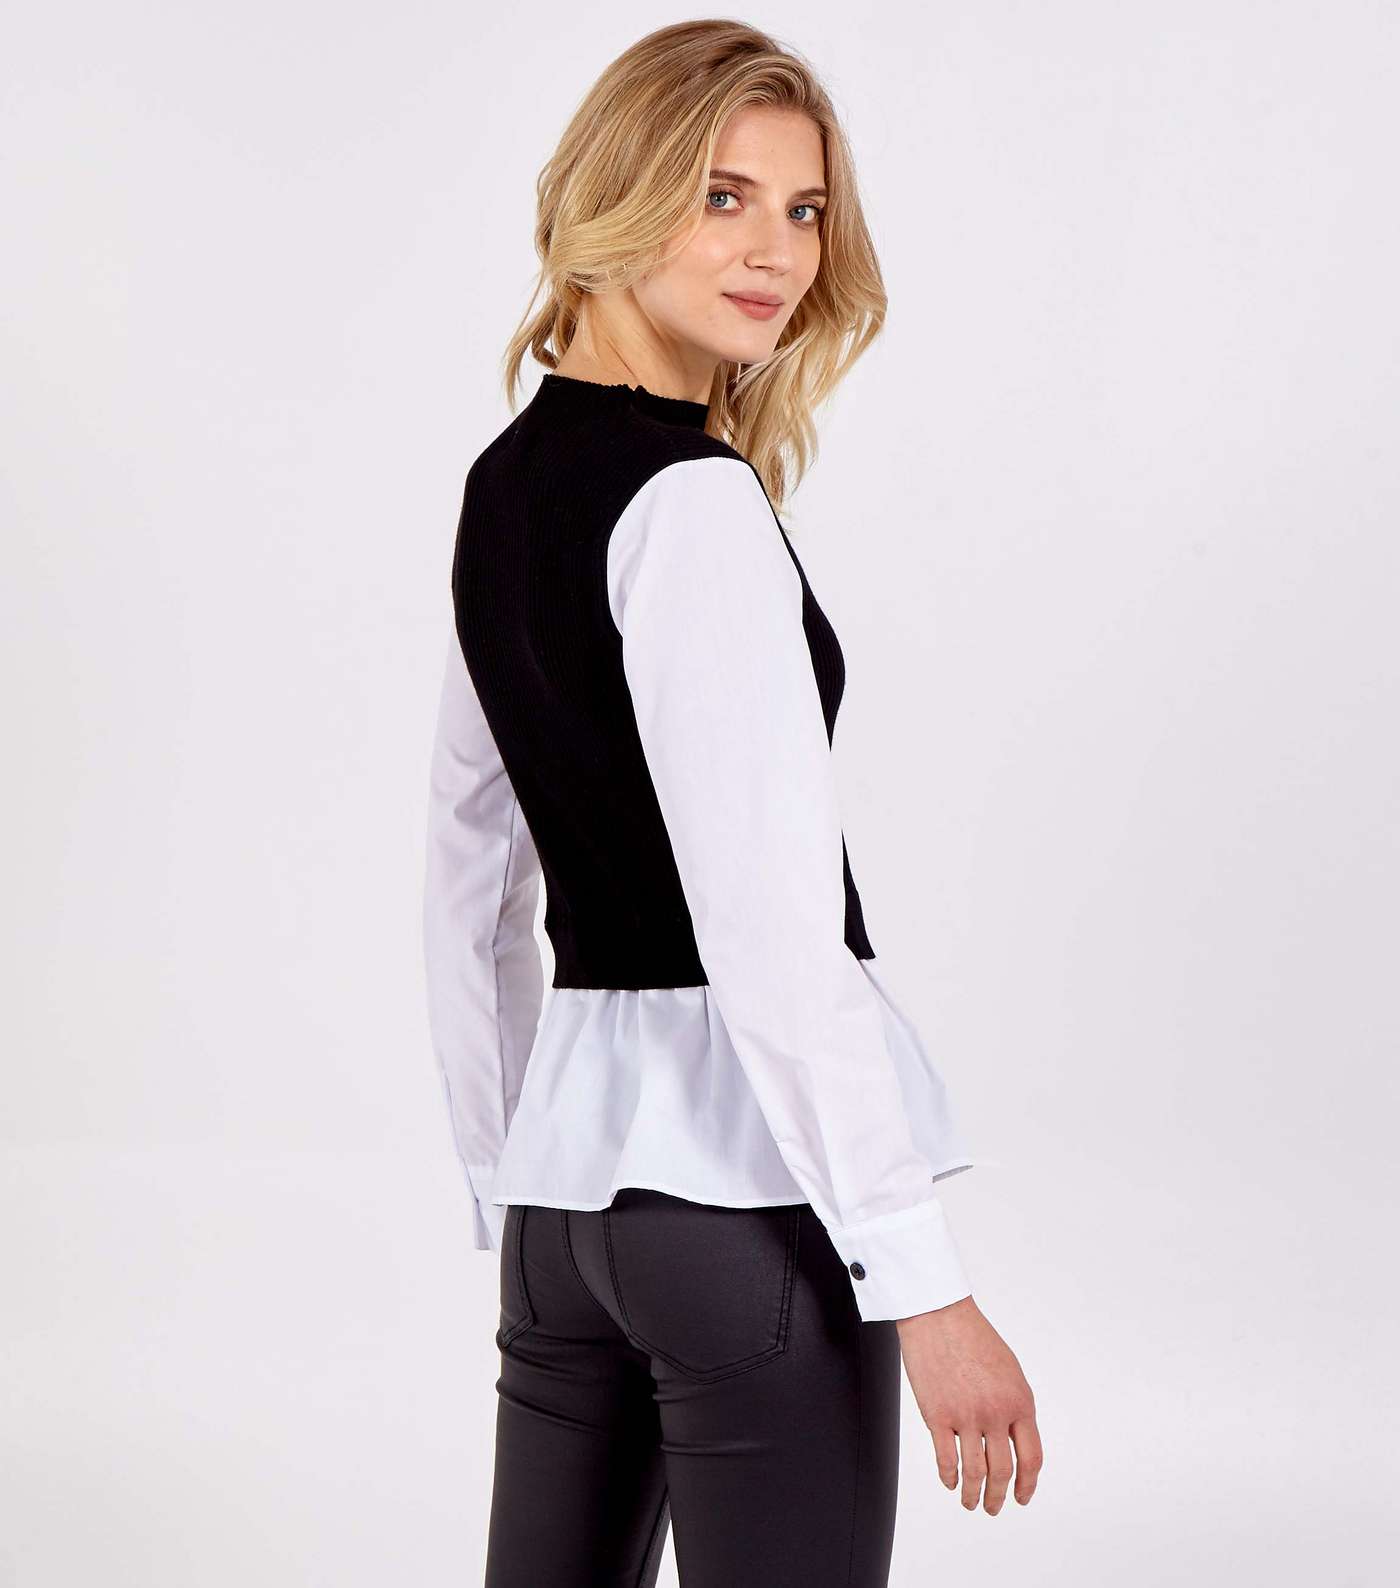 Blue Vanilla Black 2-in-1 Peplum Vest Jumper Shirt Image 3